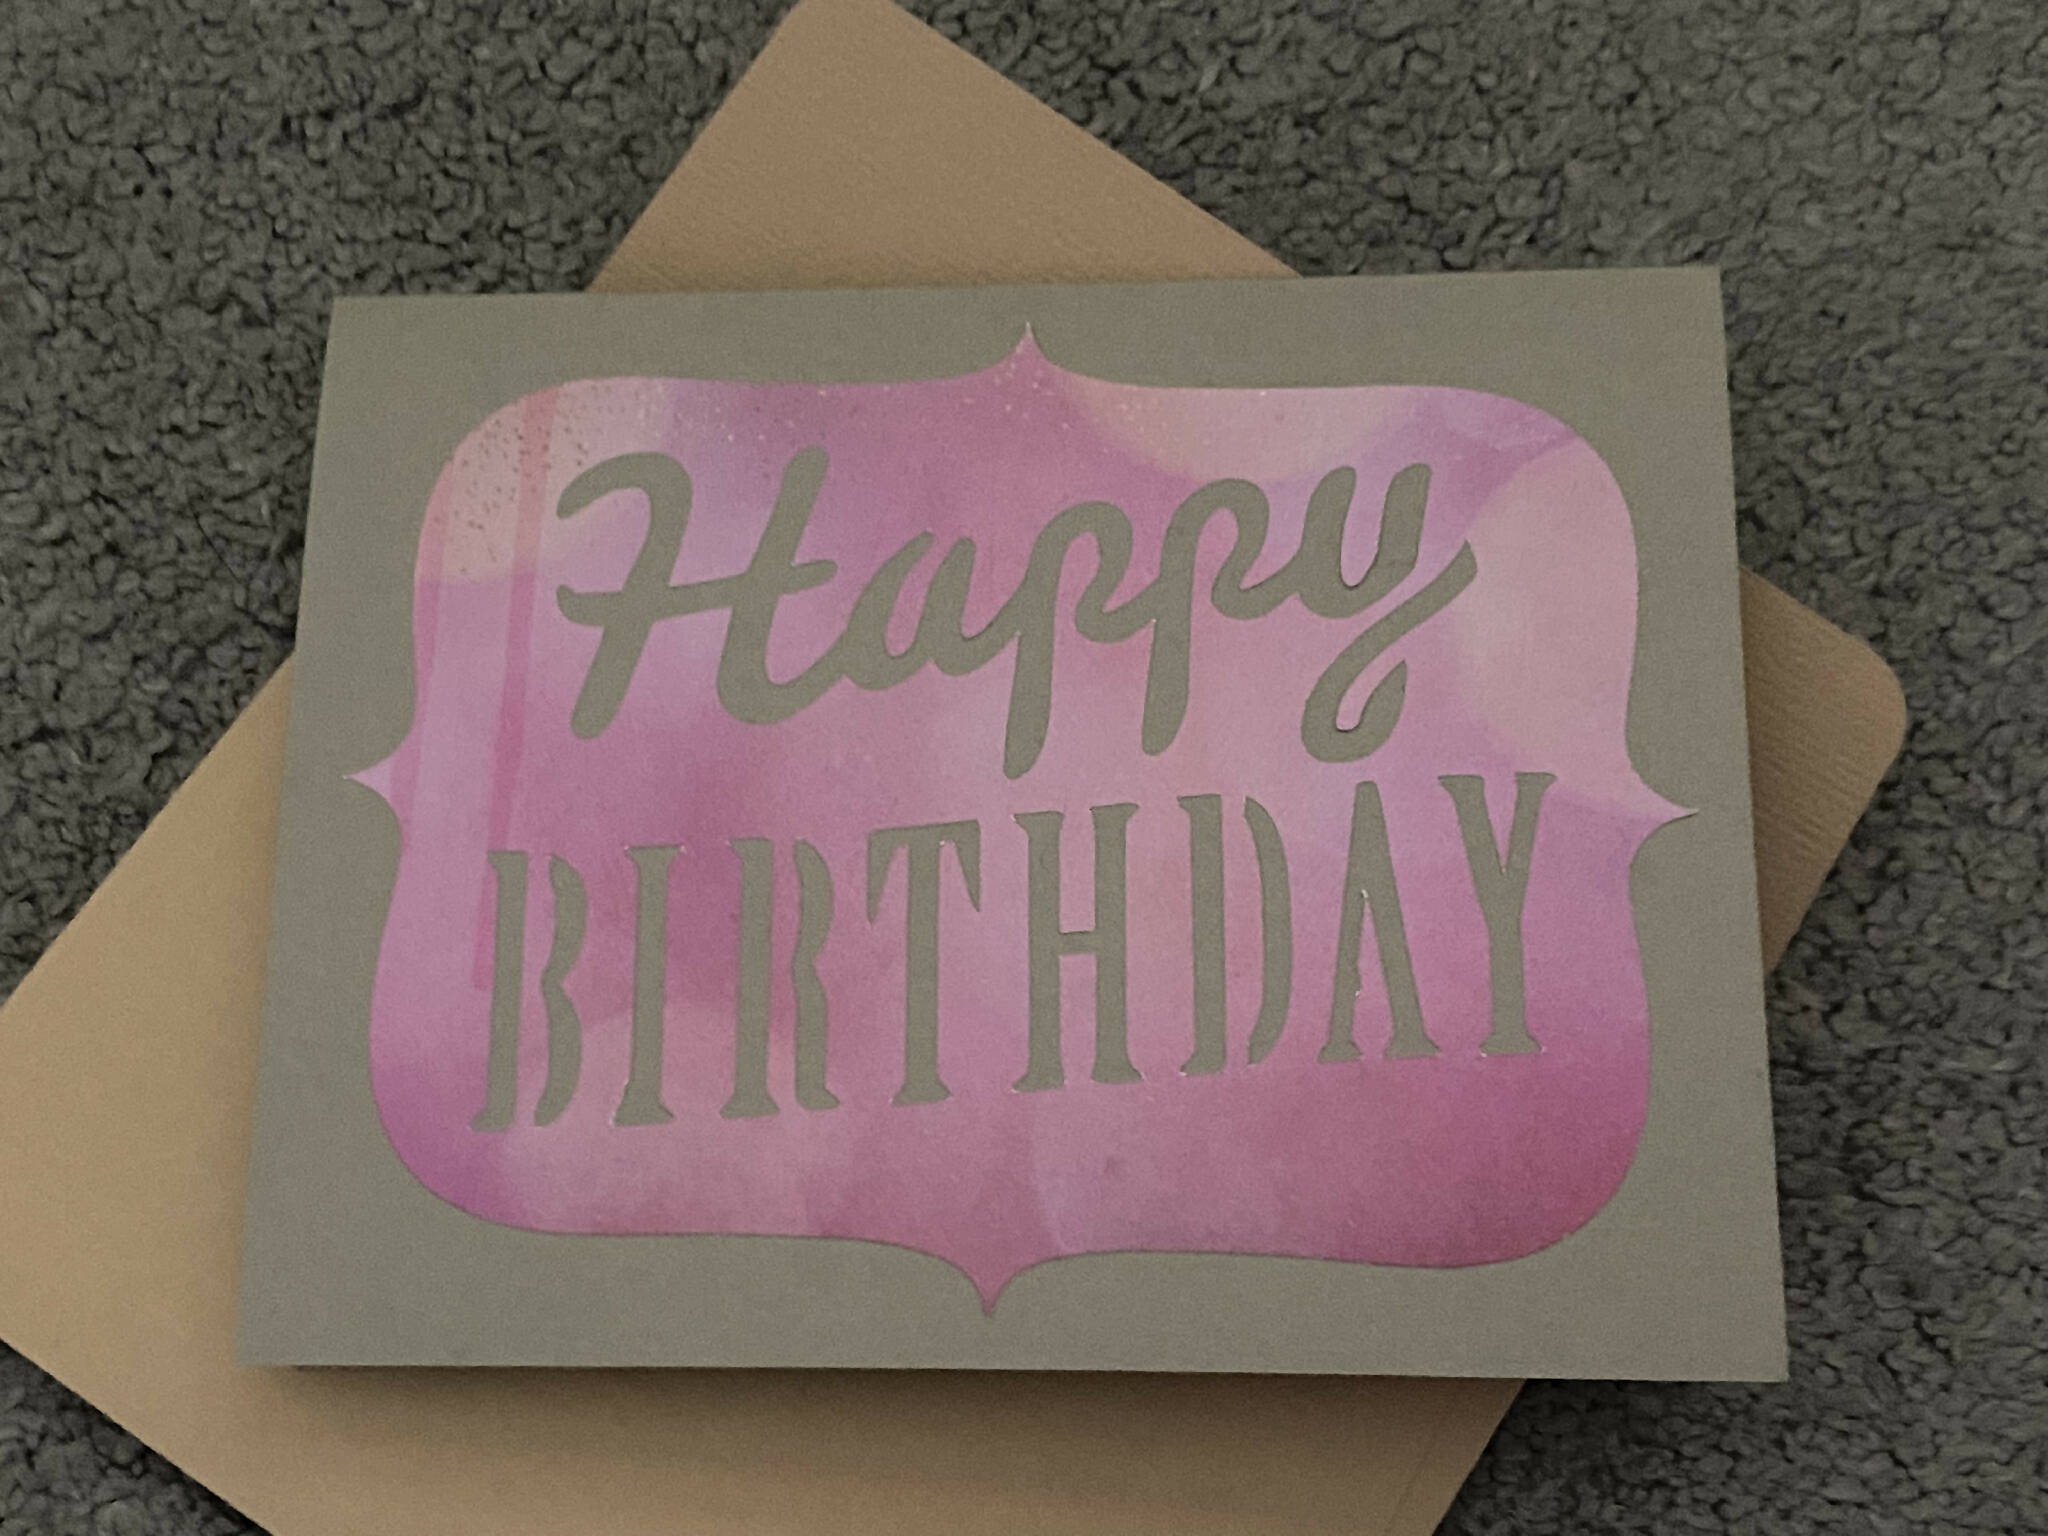 Happy birthday card - pink